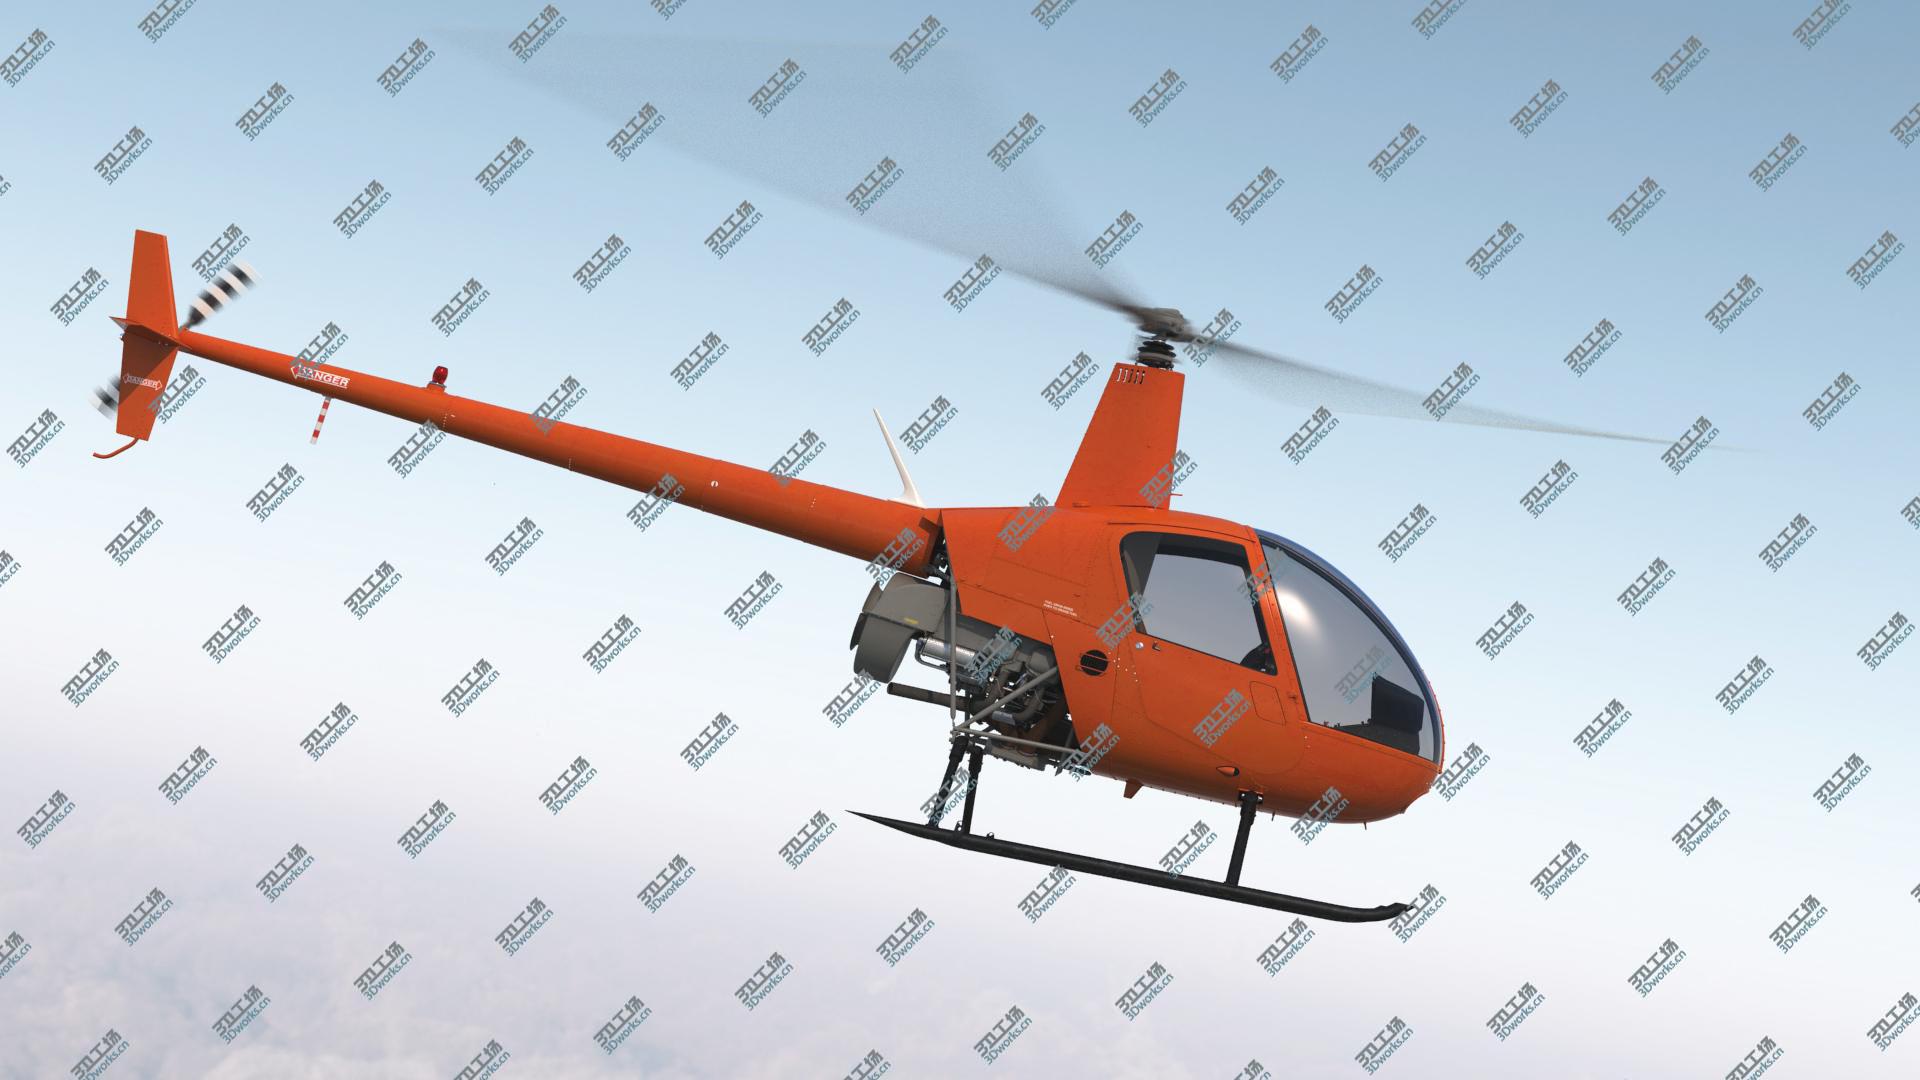 images/goods_img/20210319/3D Lightweight Helicopter model/4.jpg